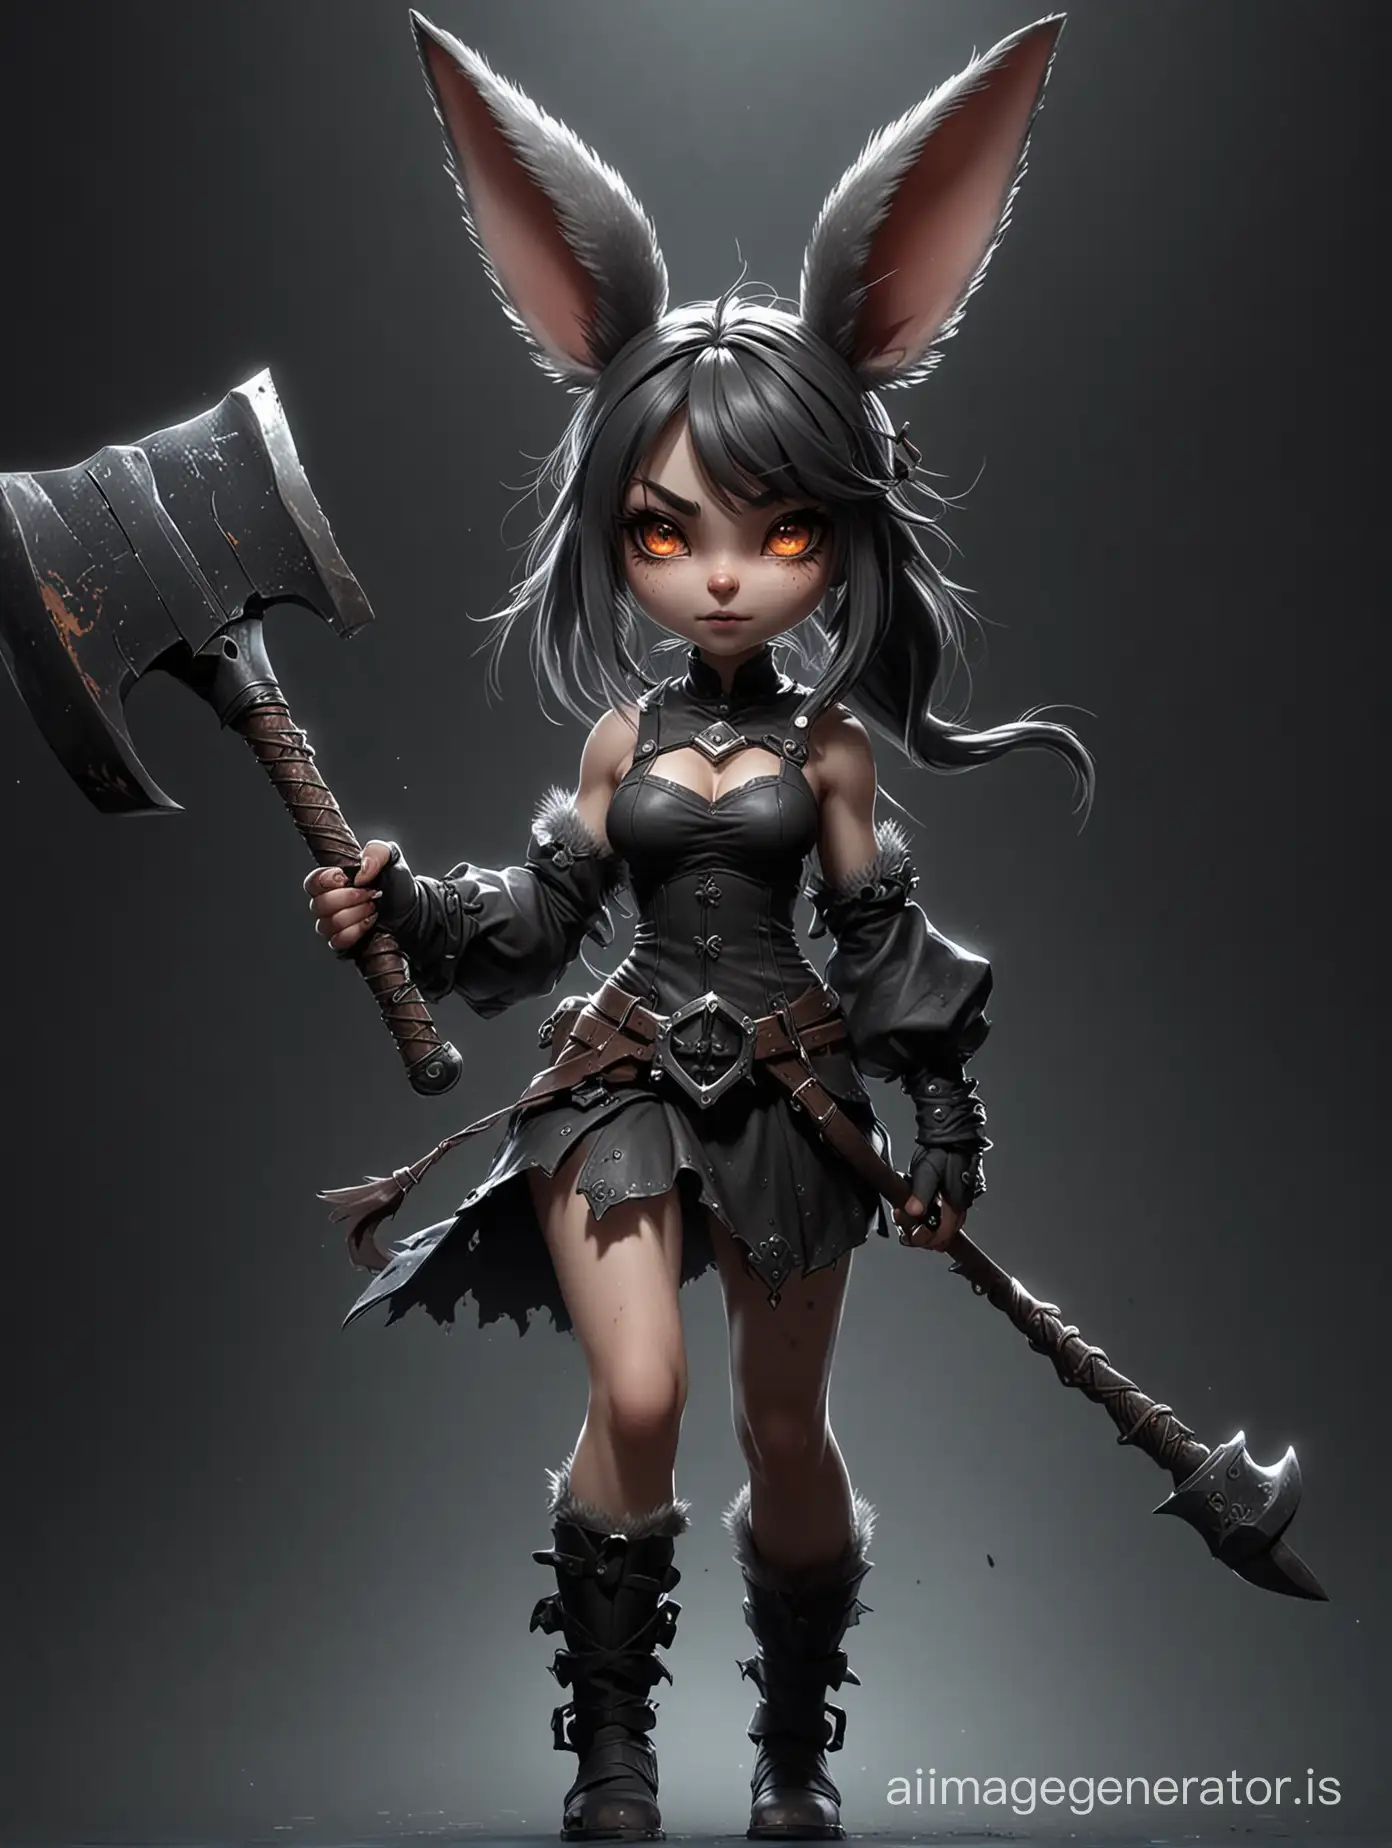 Ominous-Fantasy-Illustration-of-Demonic-Rabbit-Girl-with-Axe-in-HD-3D-Rendering